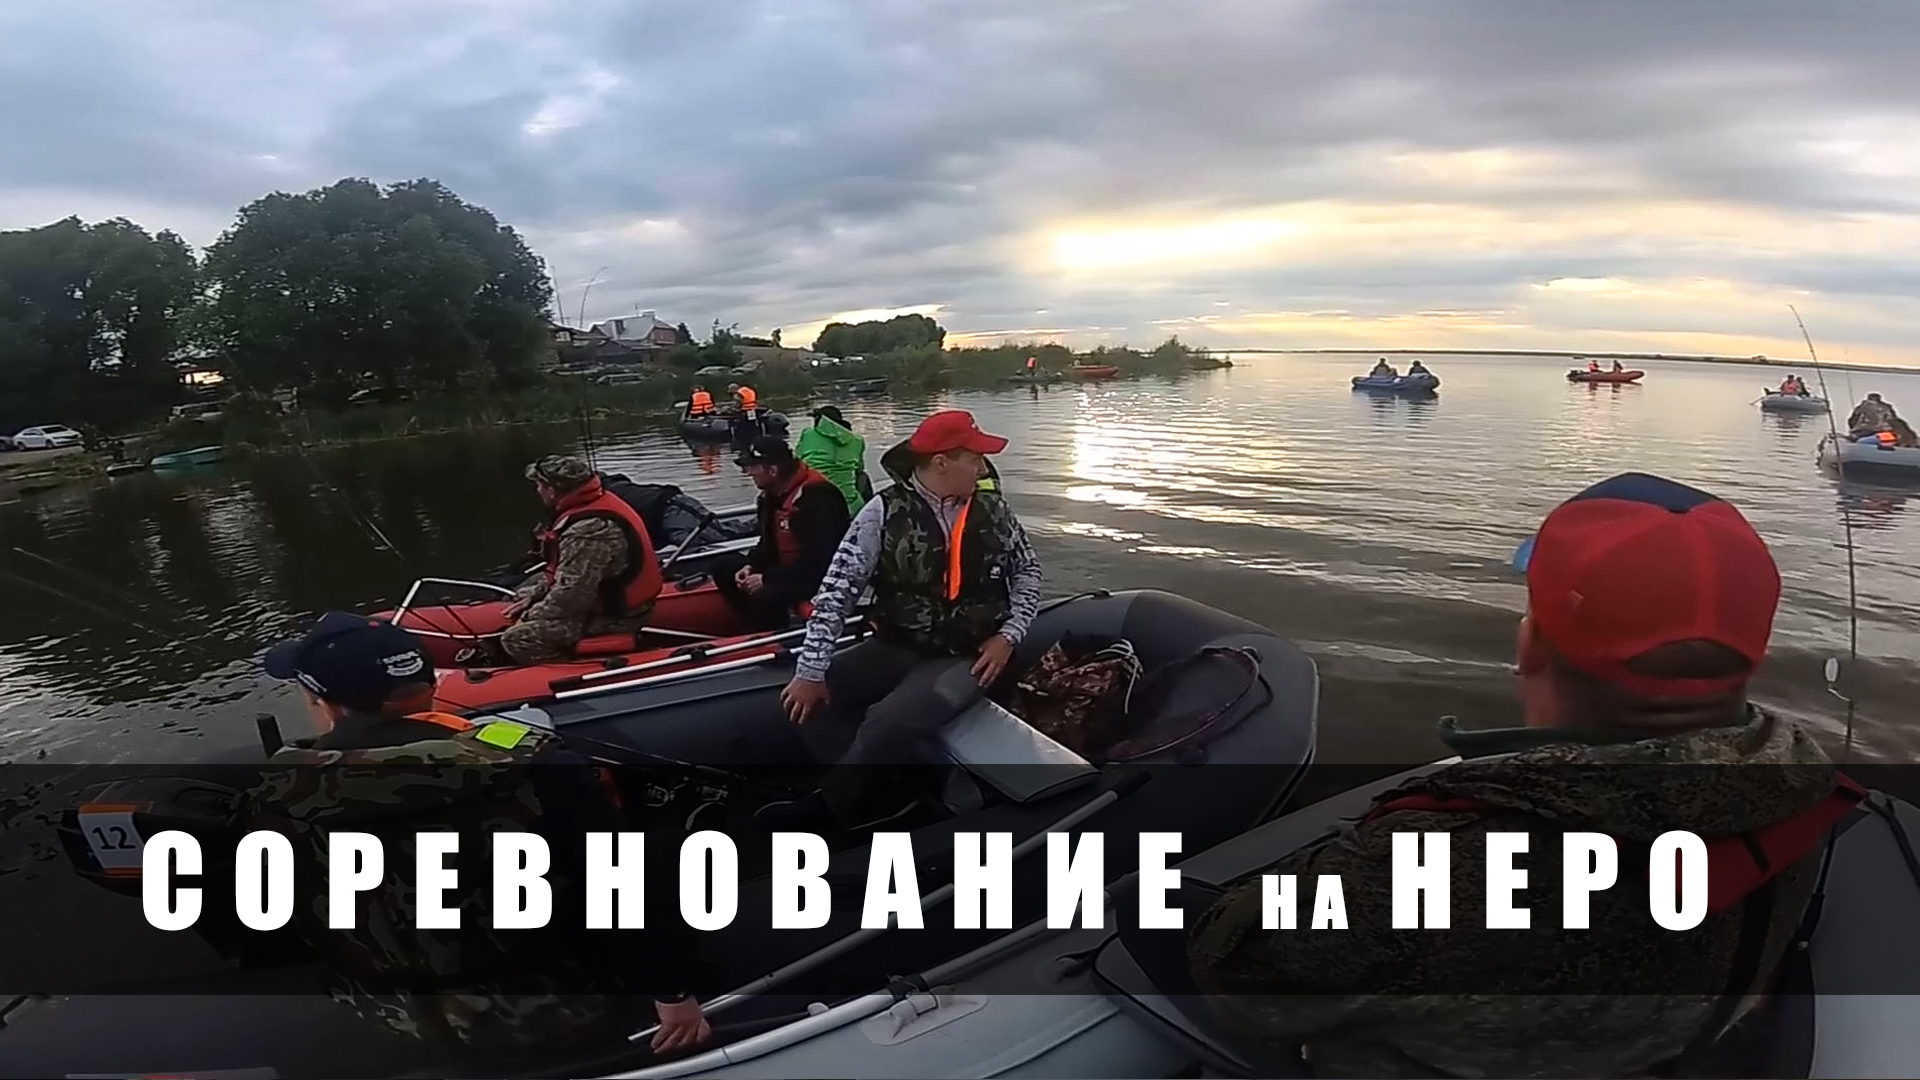 Соревнование на озере НЕРО